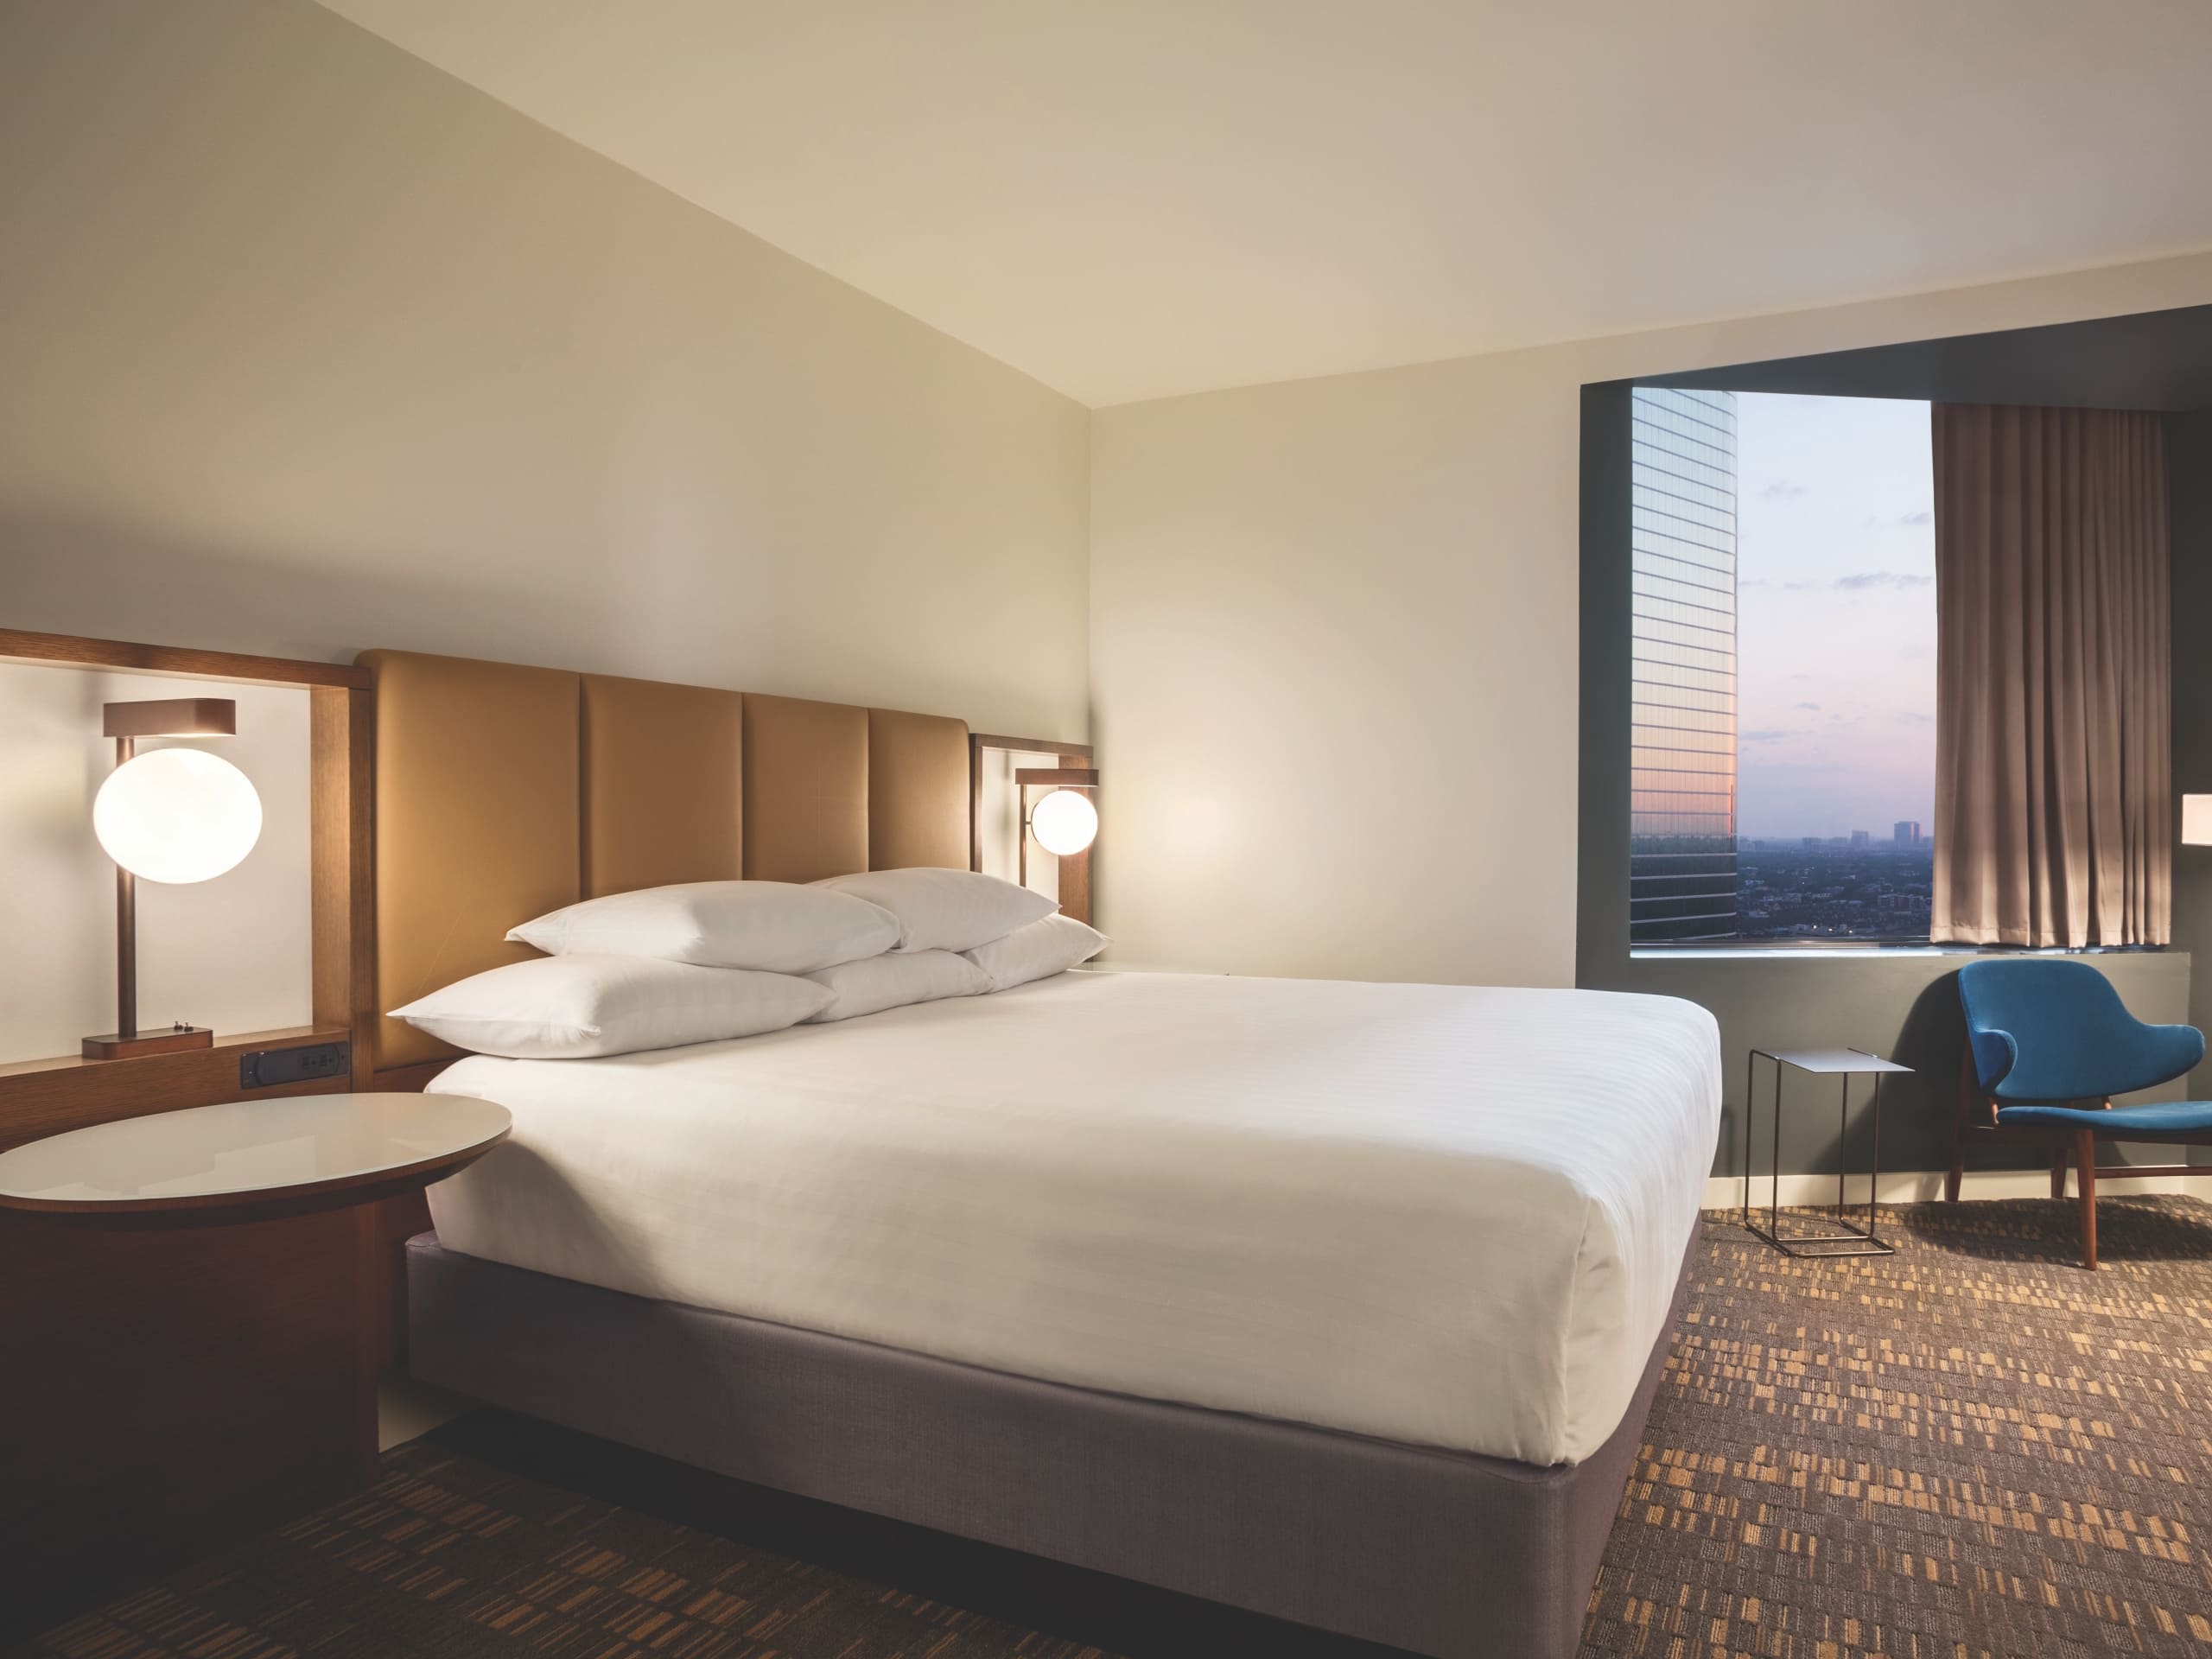 Hyatt Regency Houston imperial suite guest room with king sized bed